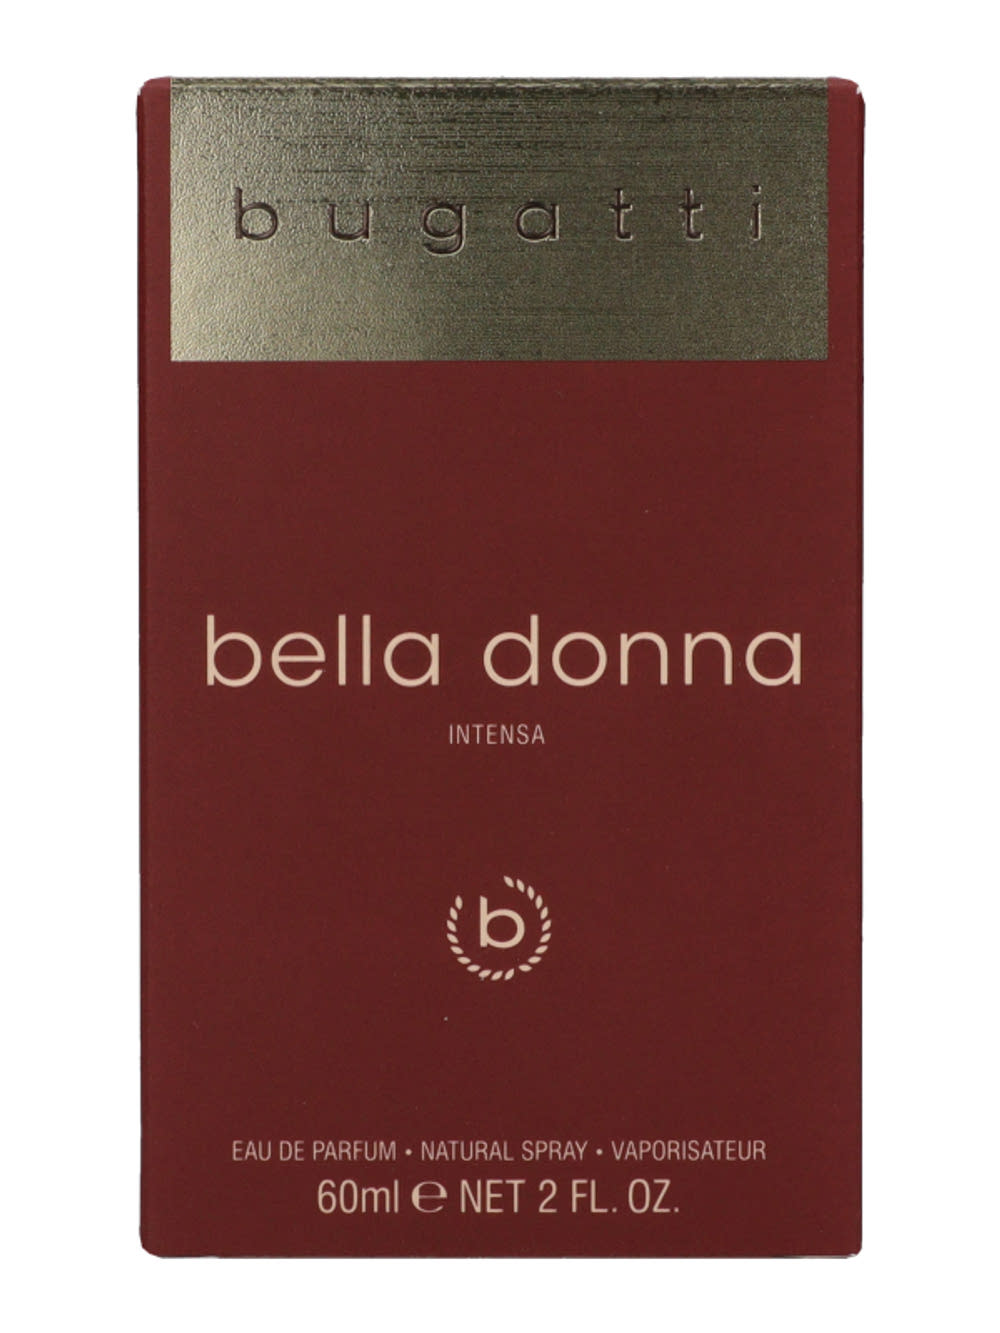 Bugatti Bella Donna Intensa női - eau ml 60 perfume de